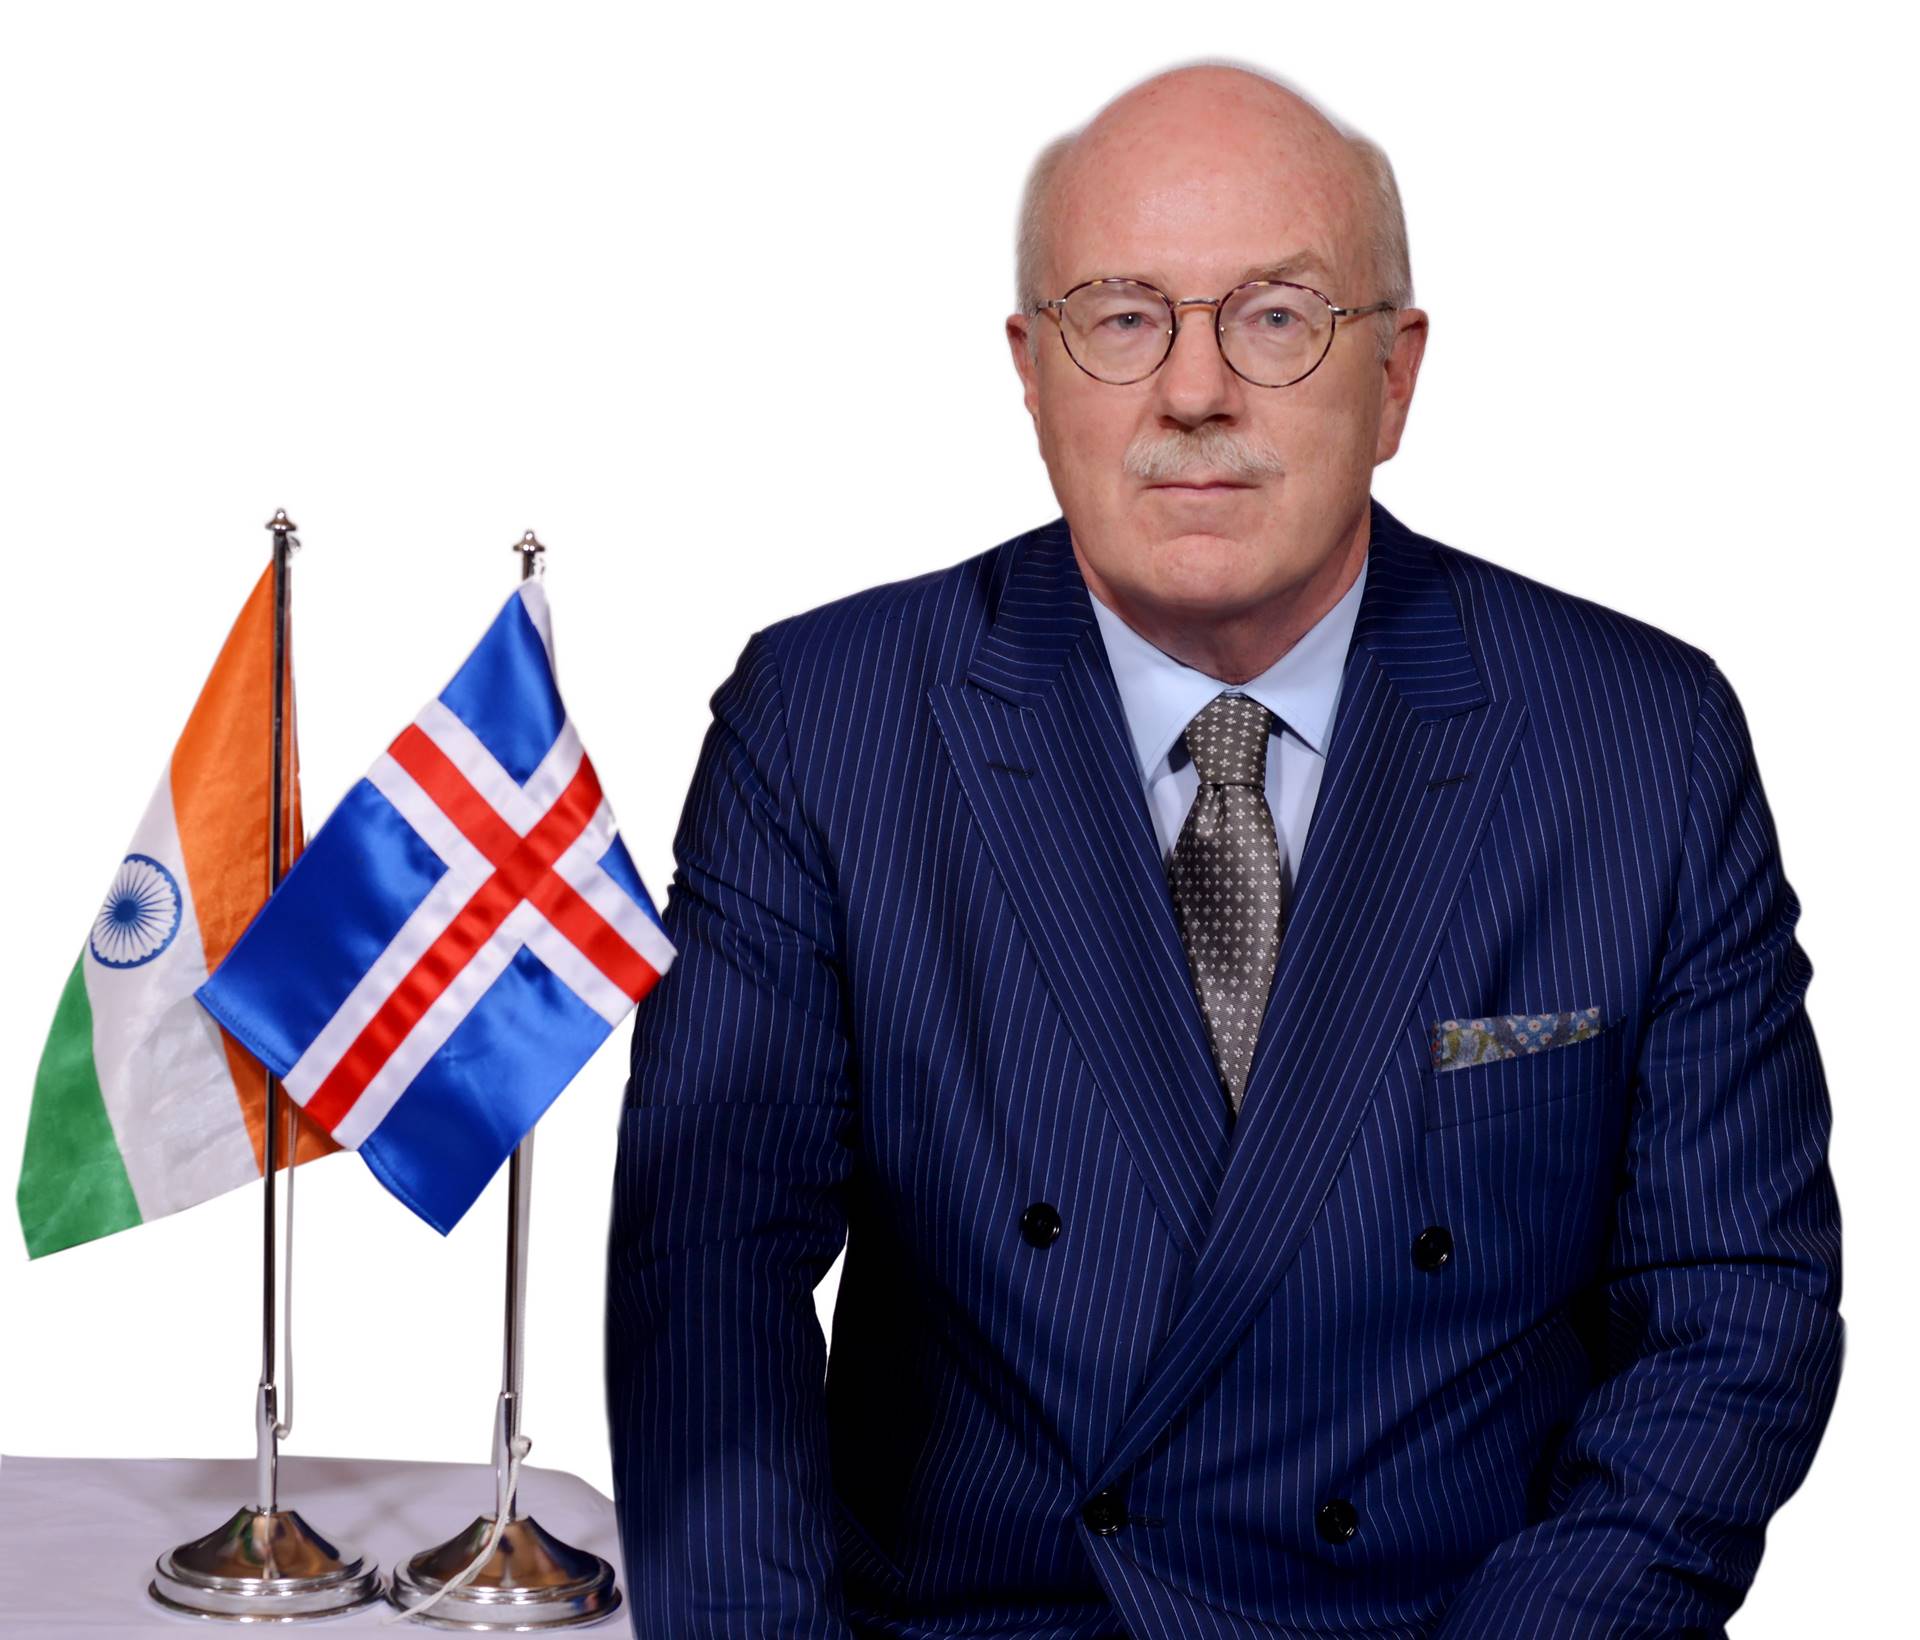 Ambassador of Iceland in India, Mr. Gudni Bragason